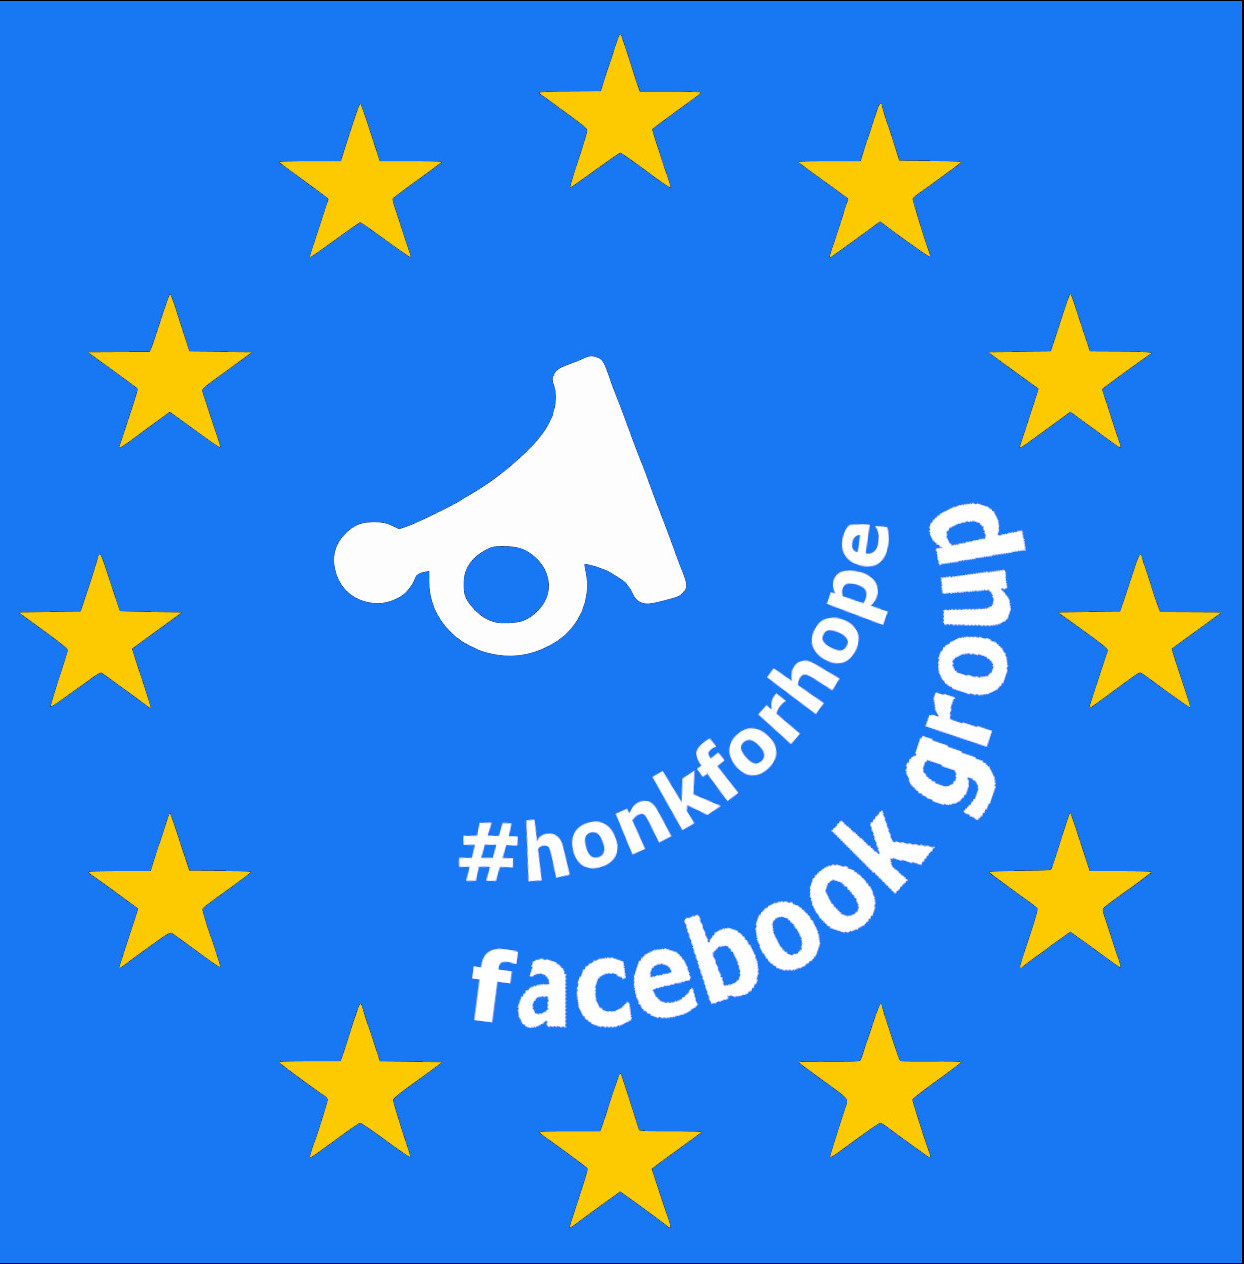 facebook group of motorcoach travel association #honkforhope